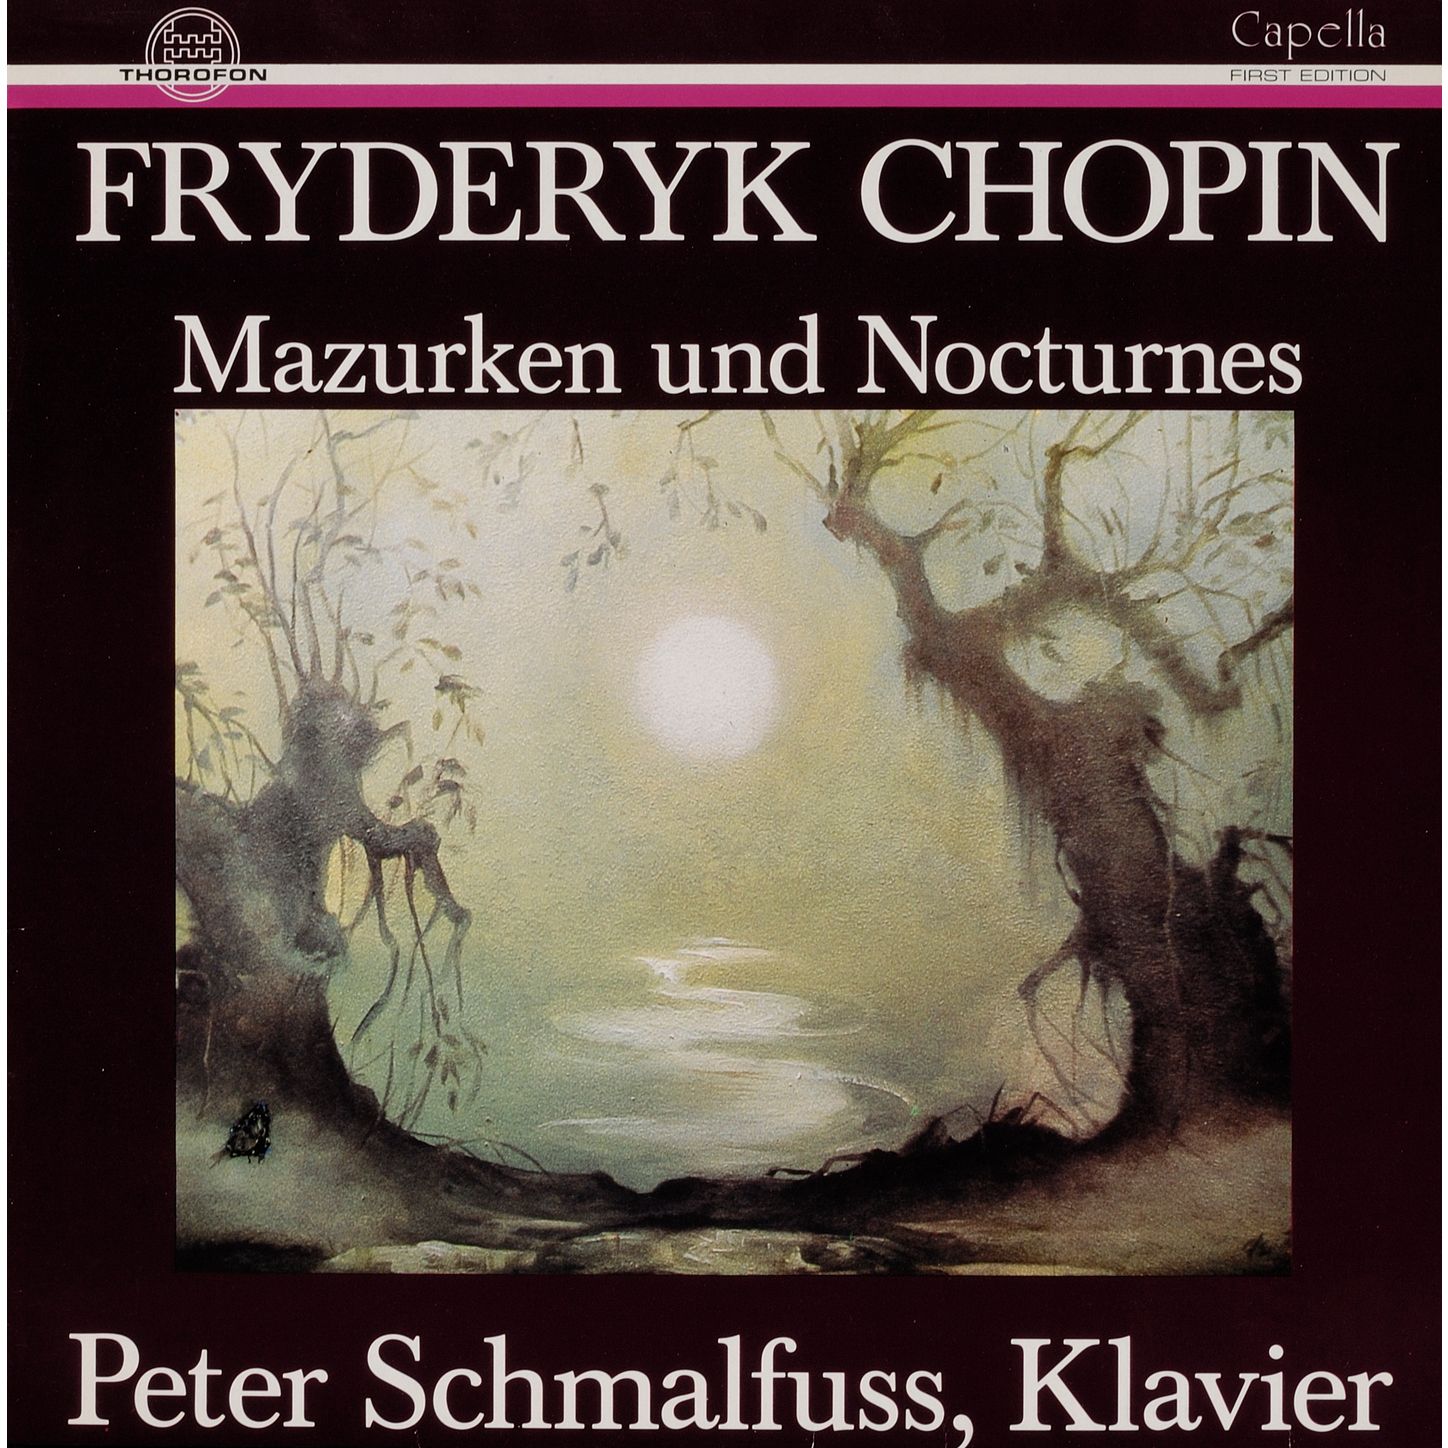 Vier Mazurken fü r Klavier in B Major, Op. 41, No. 3